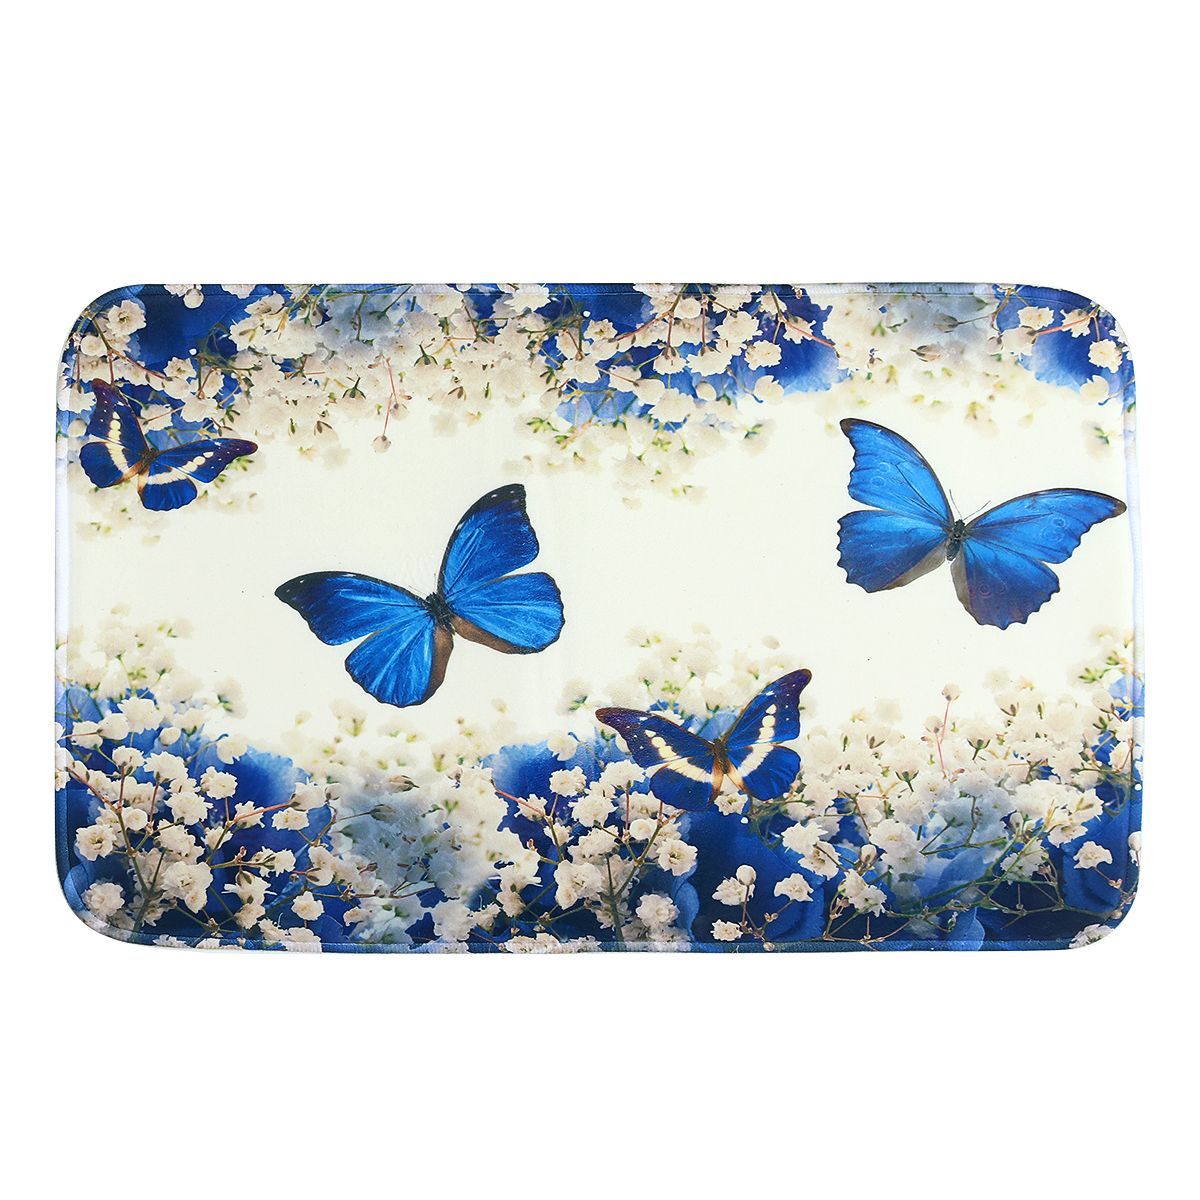 Butterflies-Lily-Therapy-Spa-Art-Prints-Waterproof-Shower-Curtain-Bathroom-Non-slip-Mats-Bath-Carpet-1730283